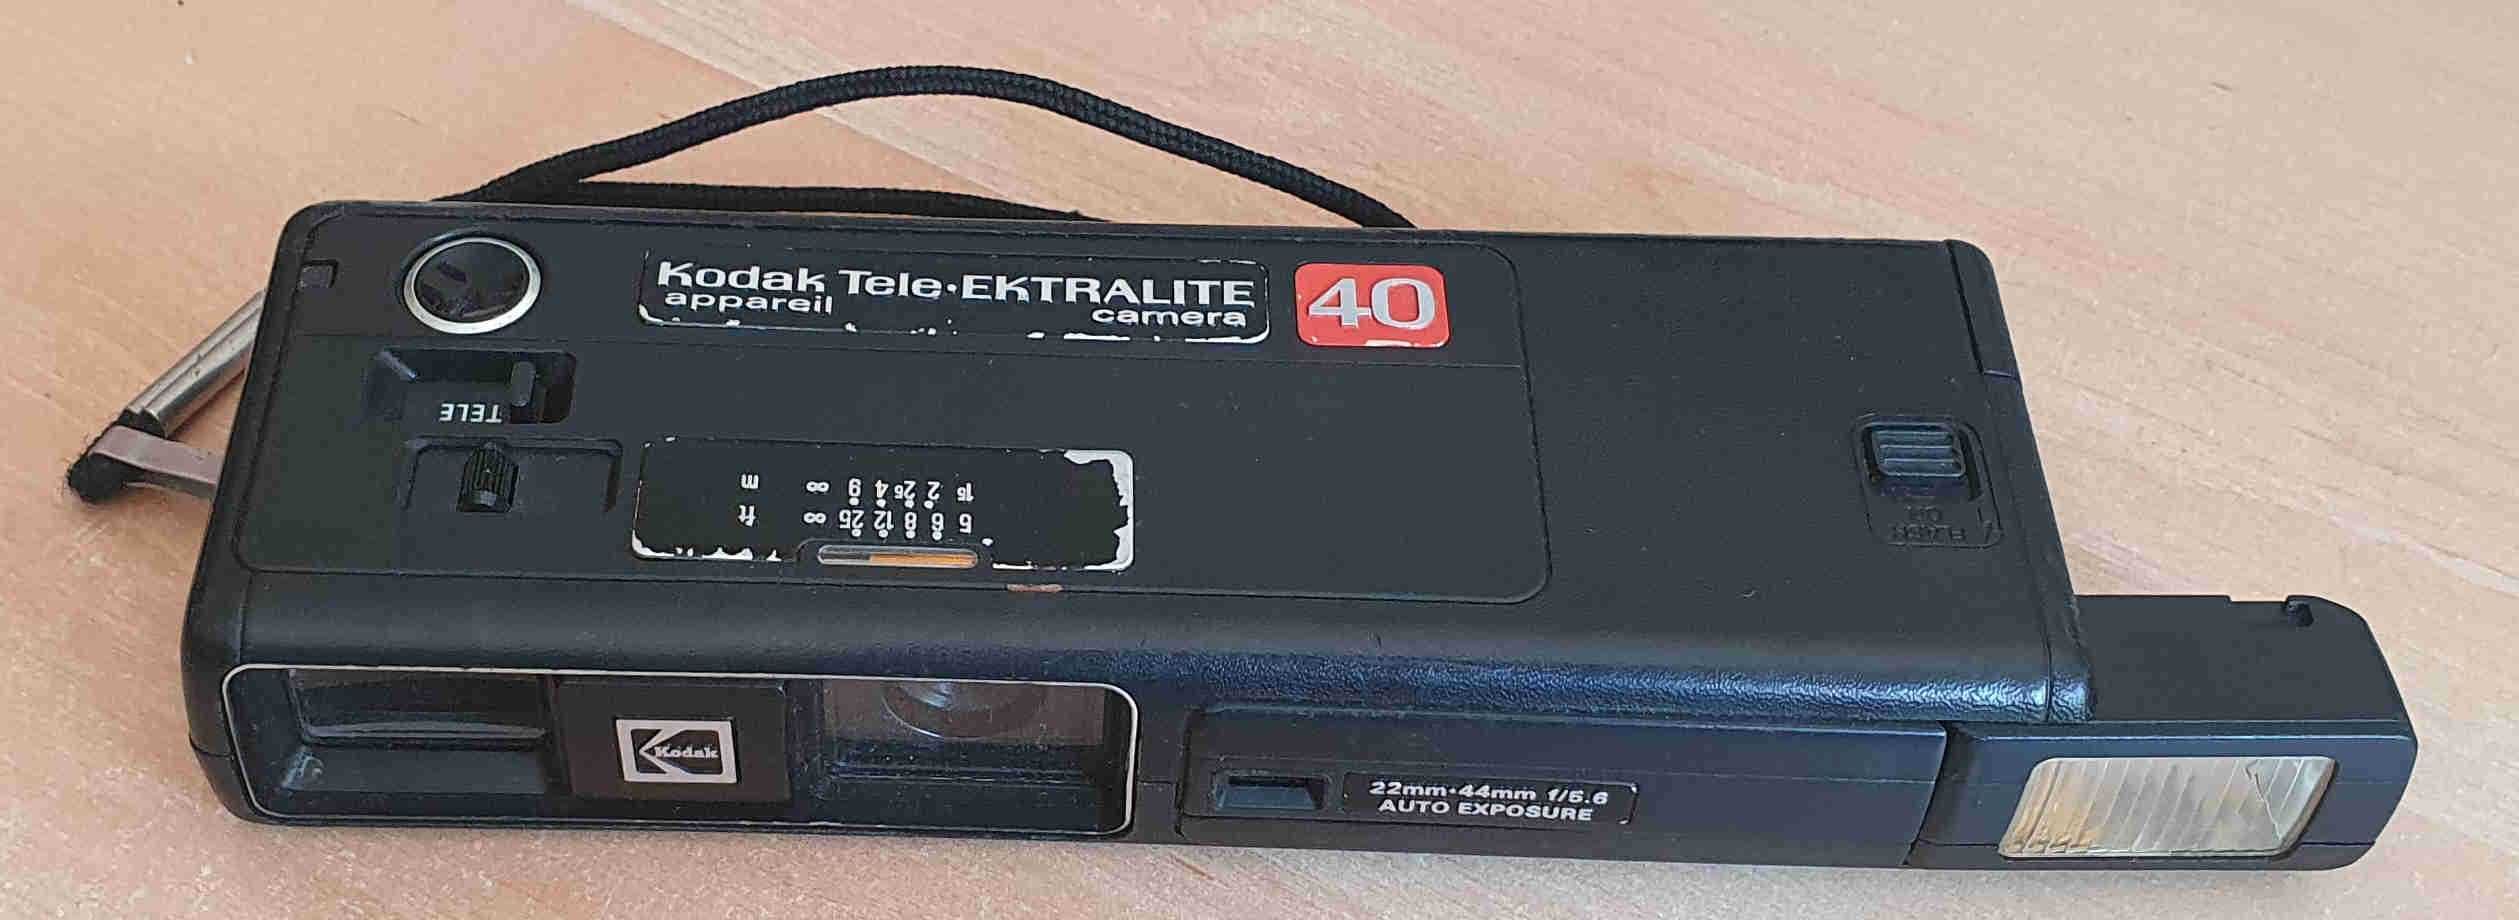 Câmera fotográfica Kodak Tele-EKTRALITE 40